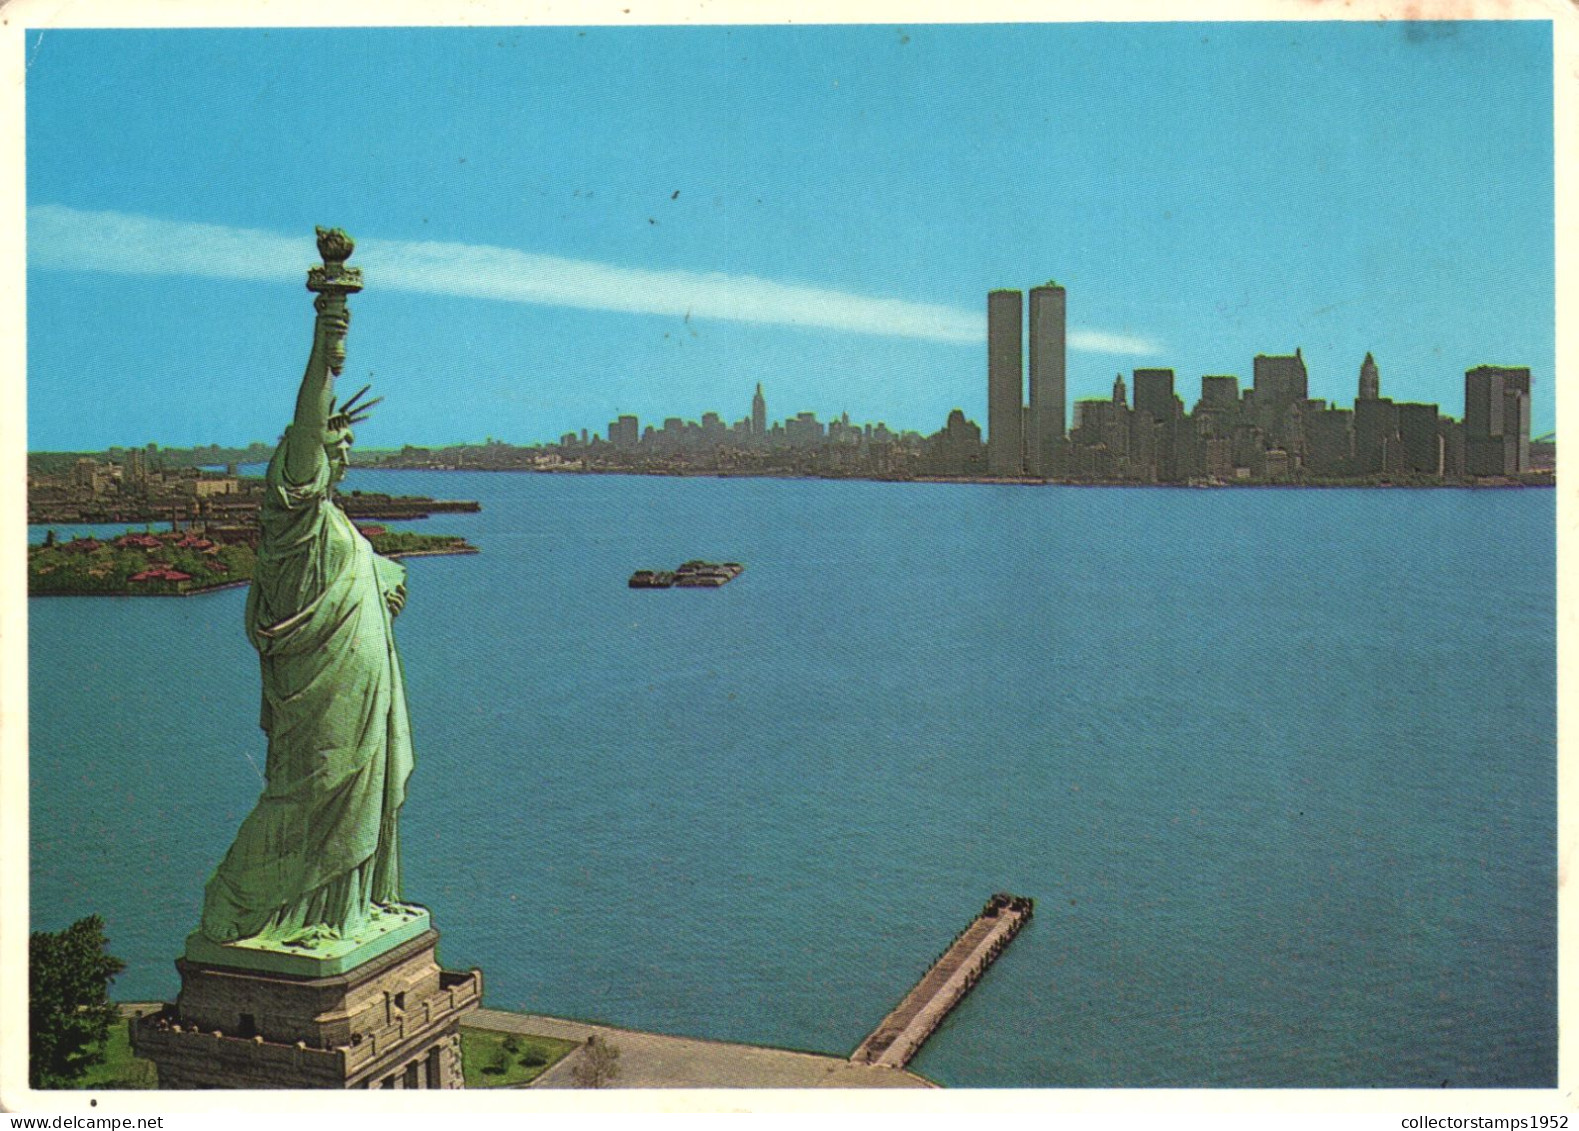 UNITED STATES, NEW YORK CITY, STATUE OF LIBERTY, LOWER MANHATTAN SKYLINE, IN THE BACKGROUND, PANORAMA - Vrijheidsbeeld